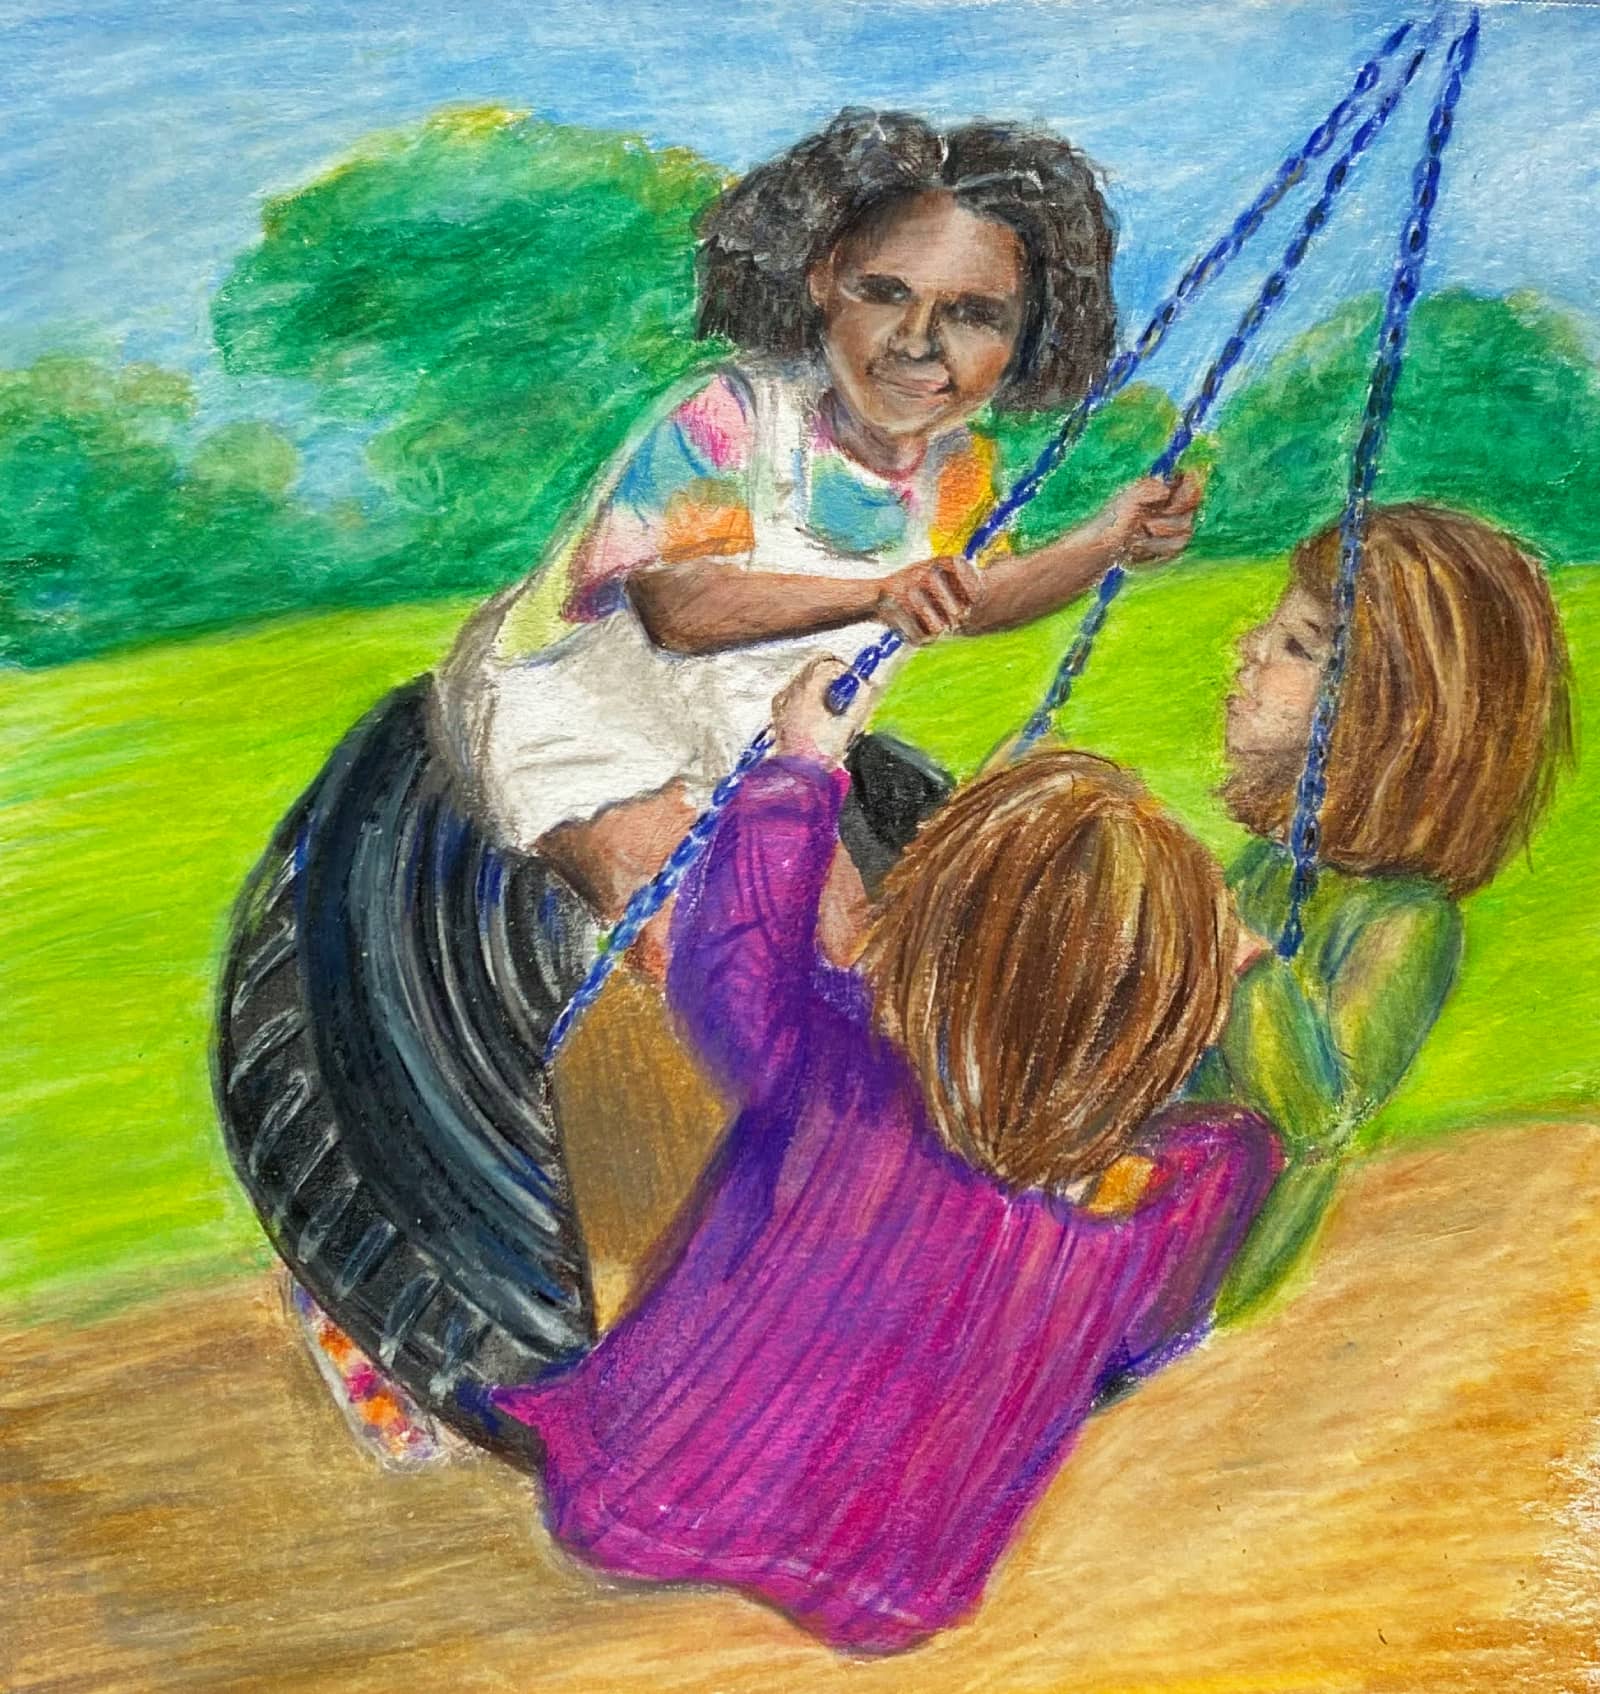 Three girls swing on a tire swing